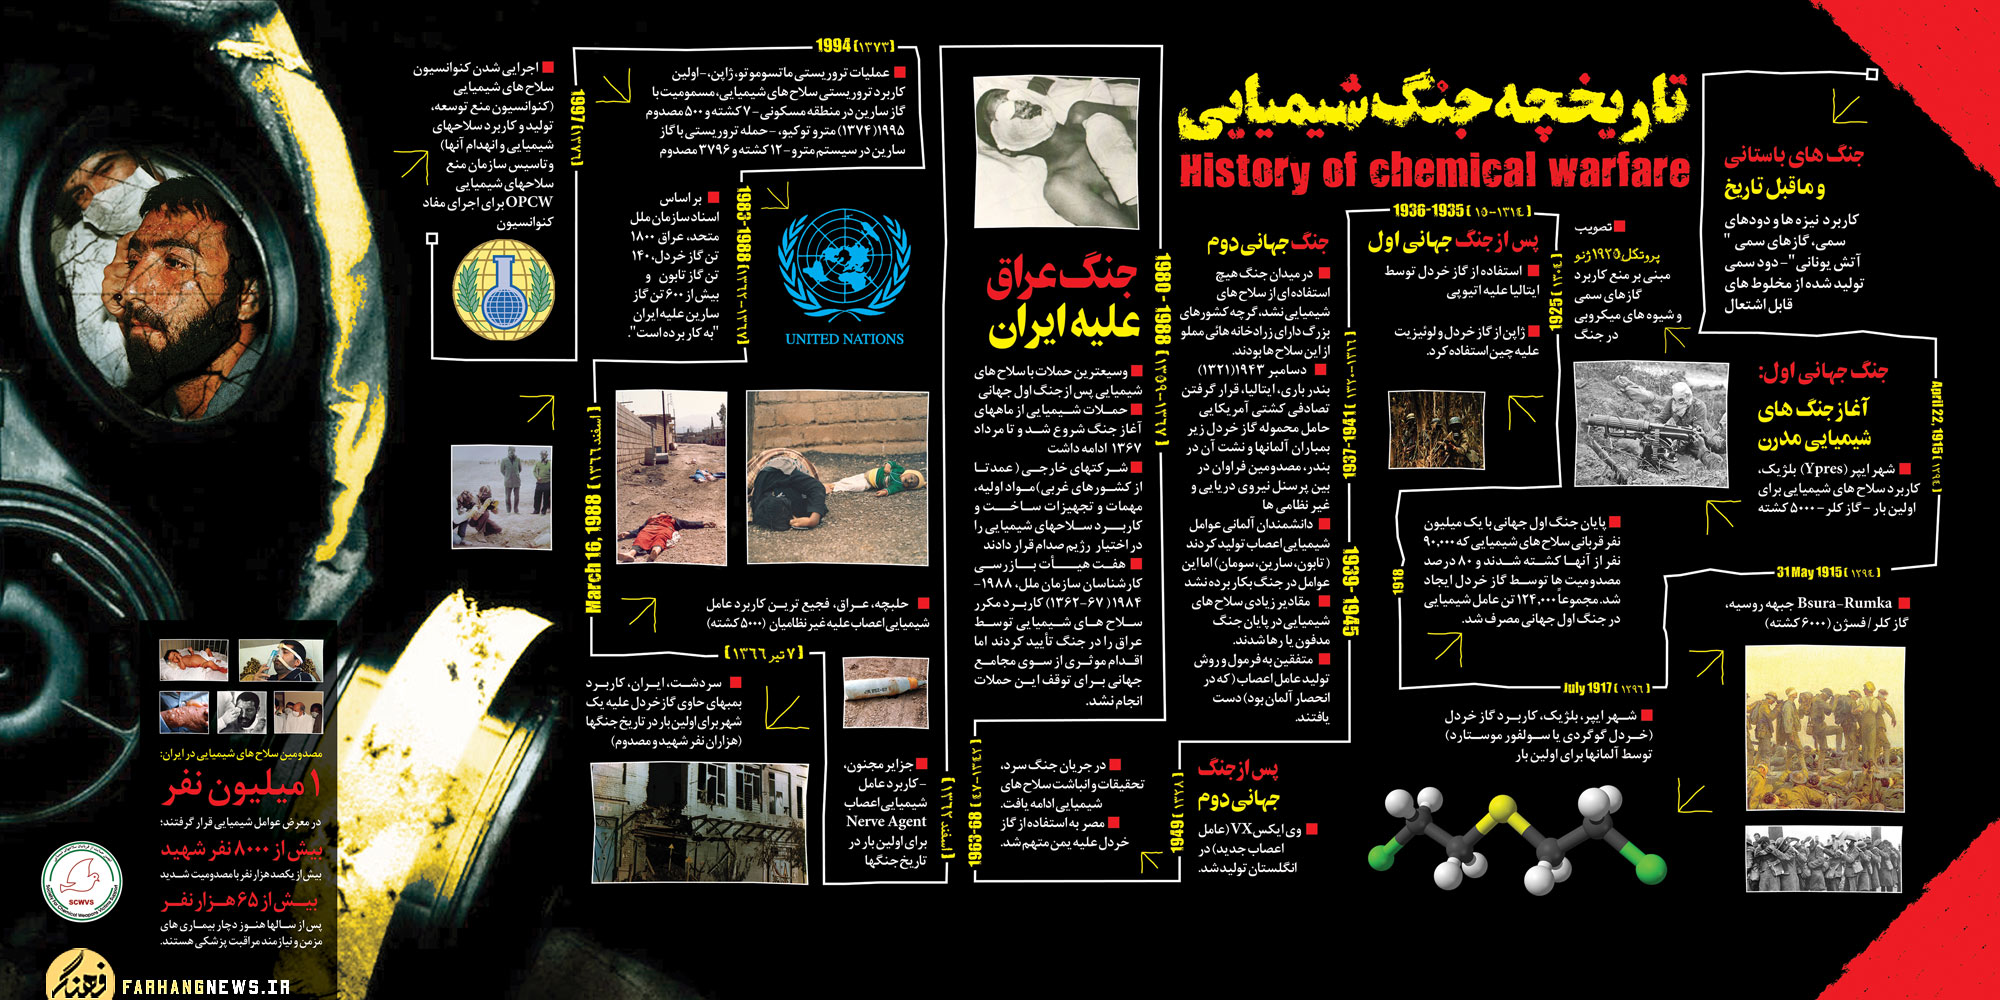 mobareze.ir - history-of-chemical-warfare-farhangnews